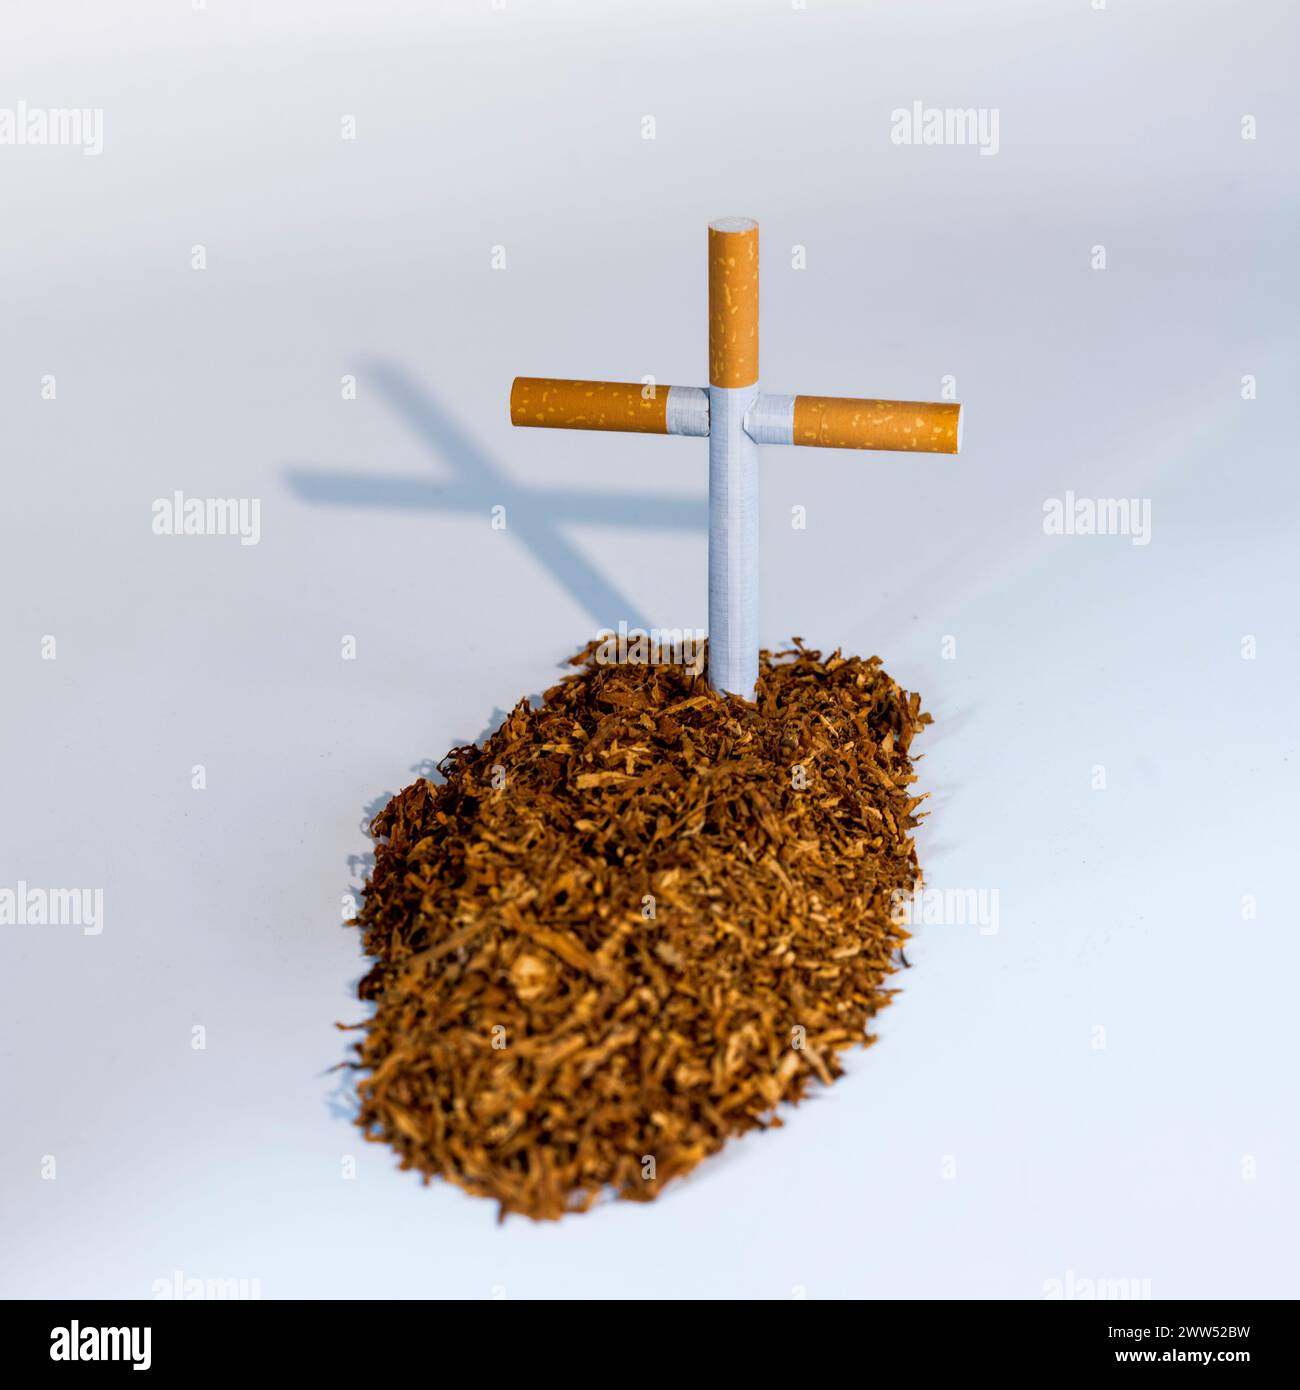 Simbólica tumba de tabaco y cigarrillos de un fumador, aislado en blanco Stock Photo